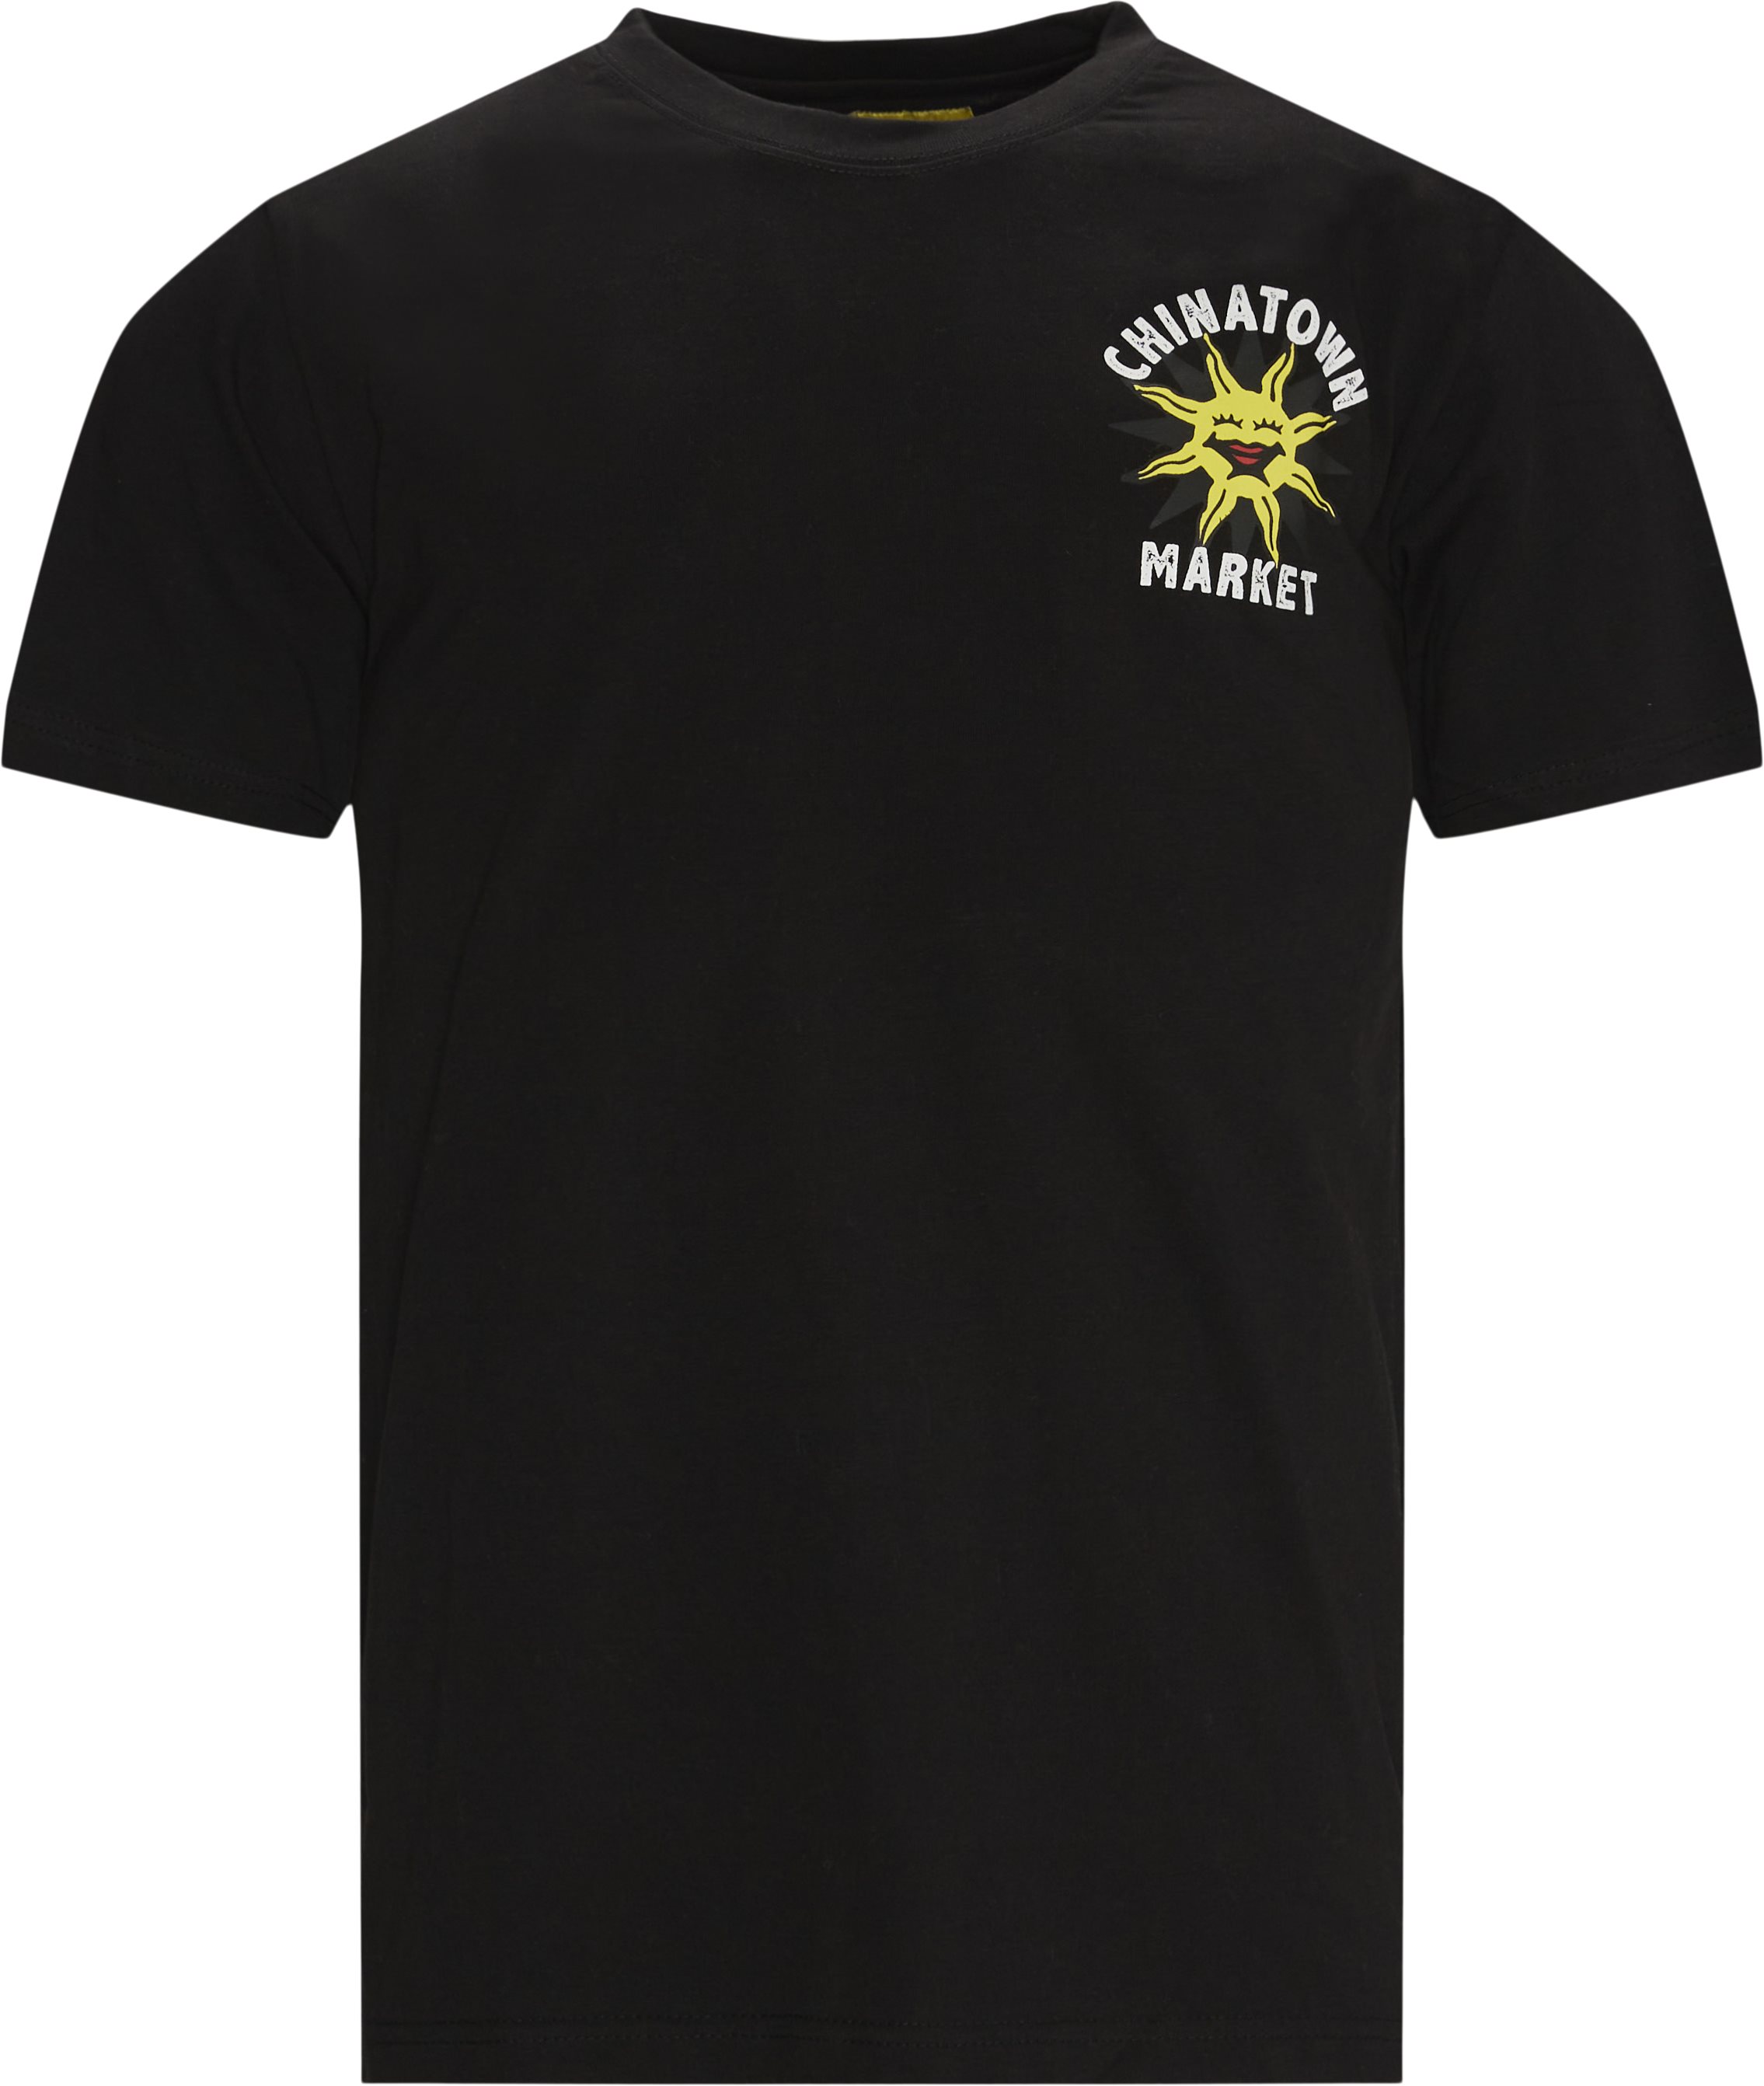 Sunshine T-shirt - T-shirts - Regular fit - Black